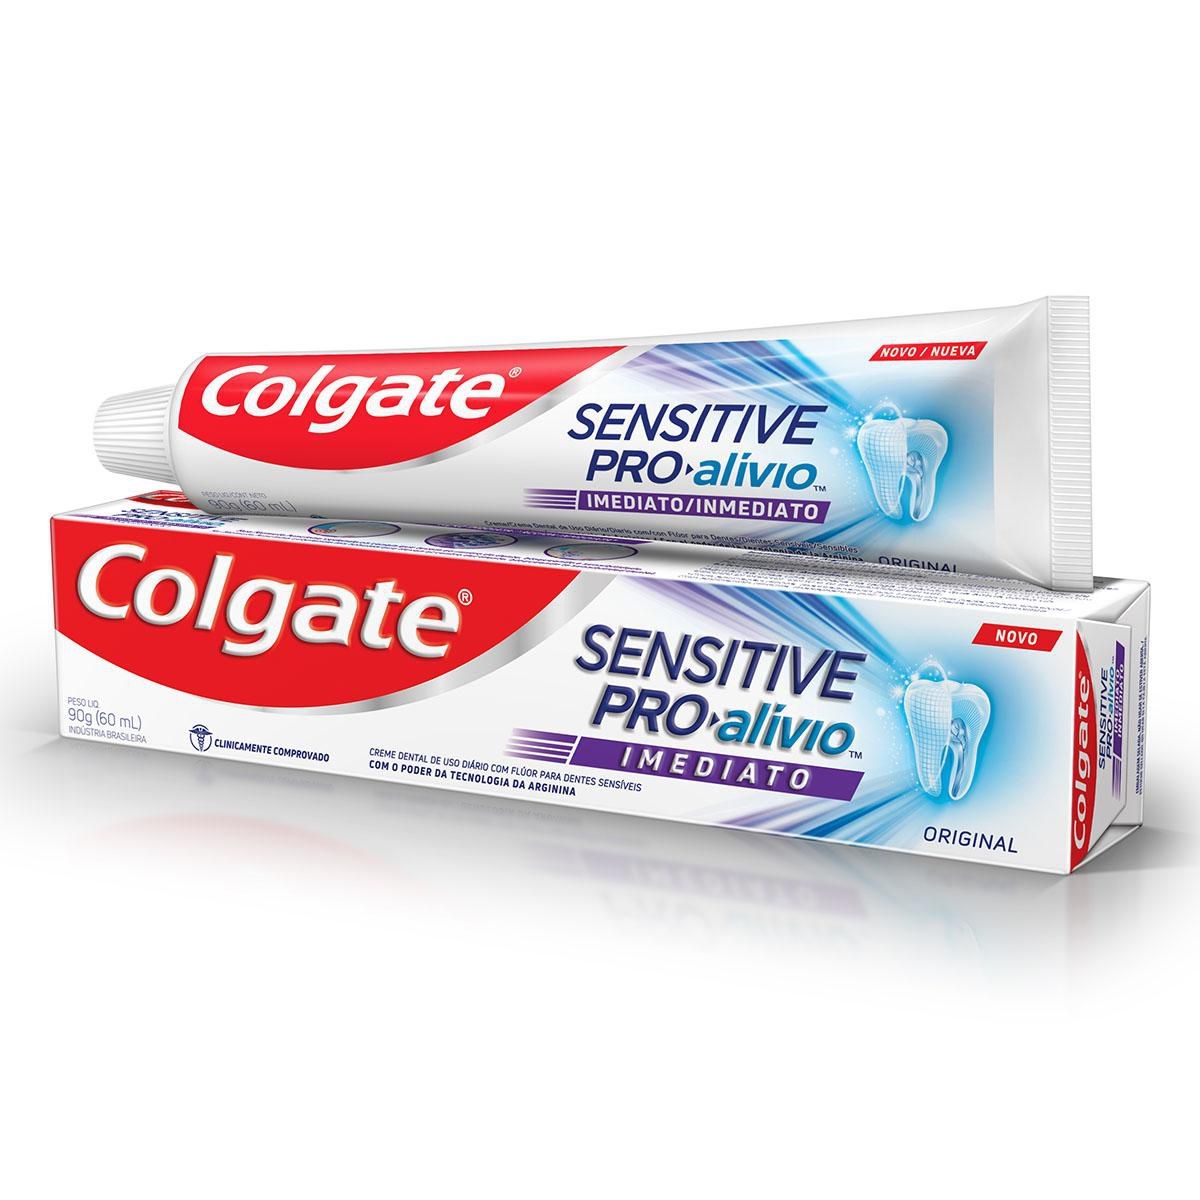 Creme Dental Colgate Sensitive Pro alivio Imediato Original 90g